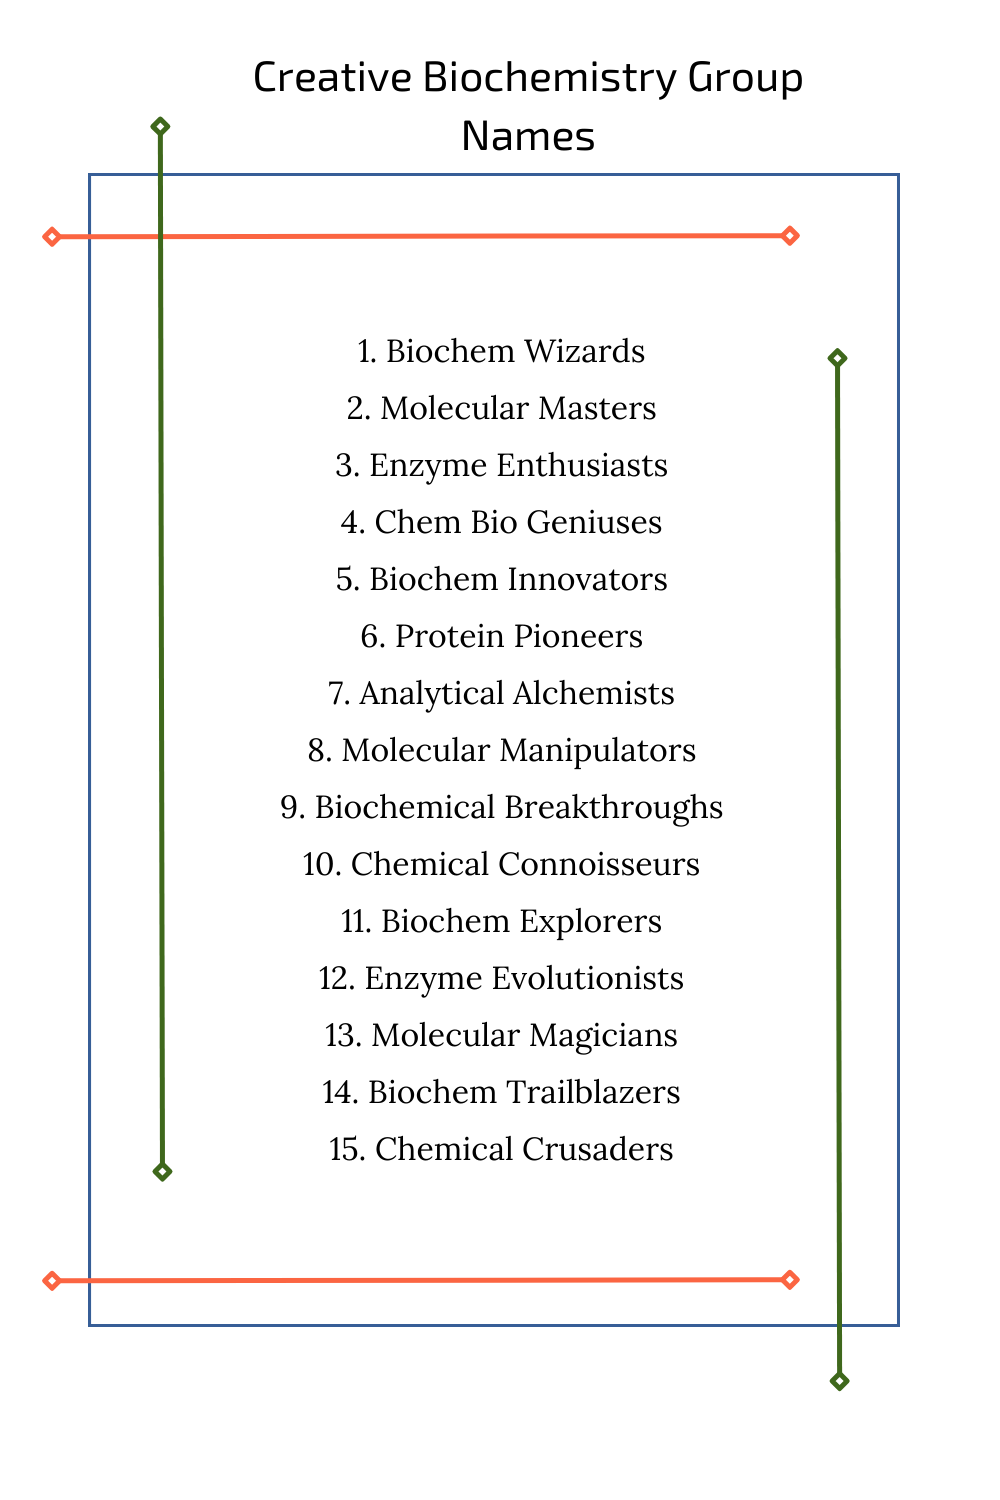 Creative Biochemistry Group Names